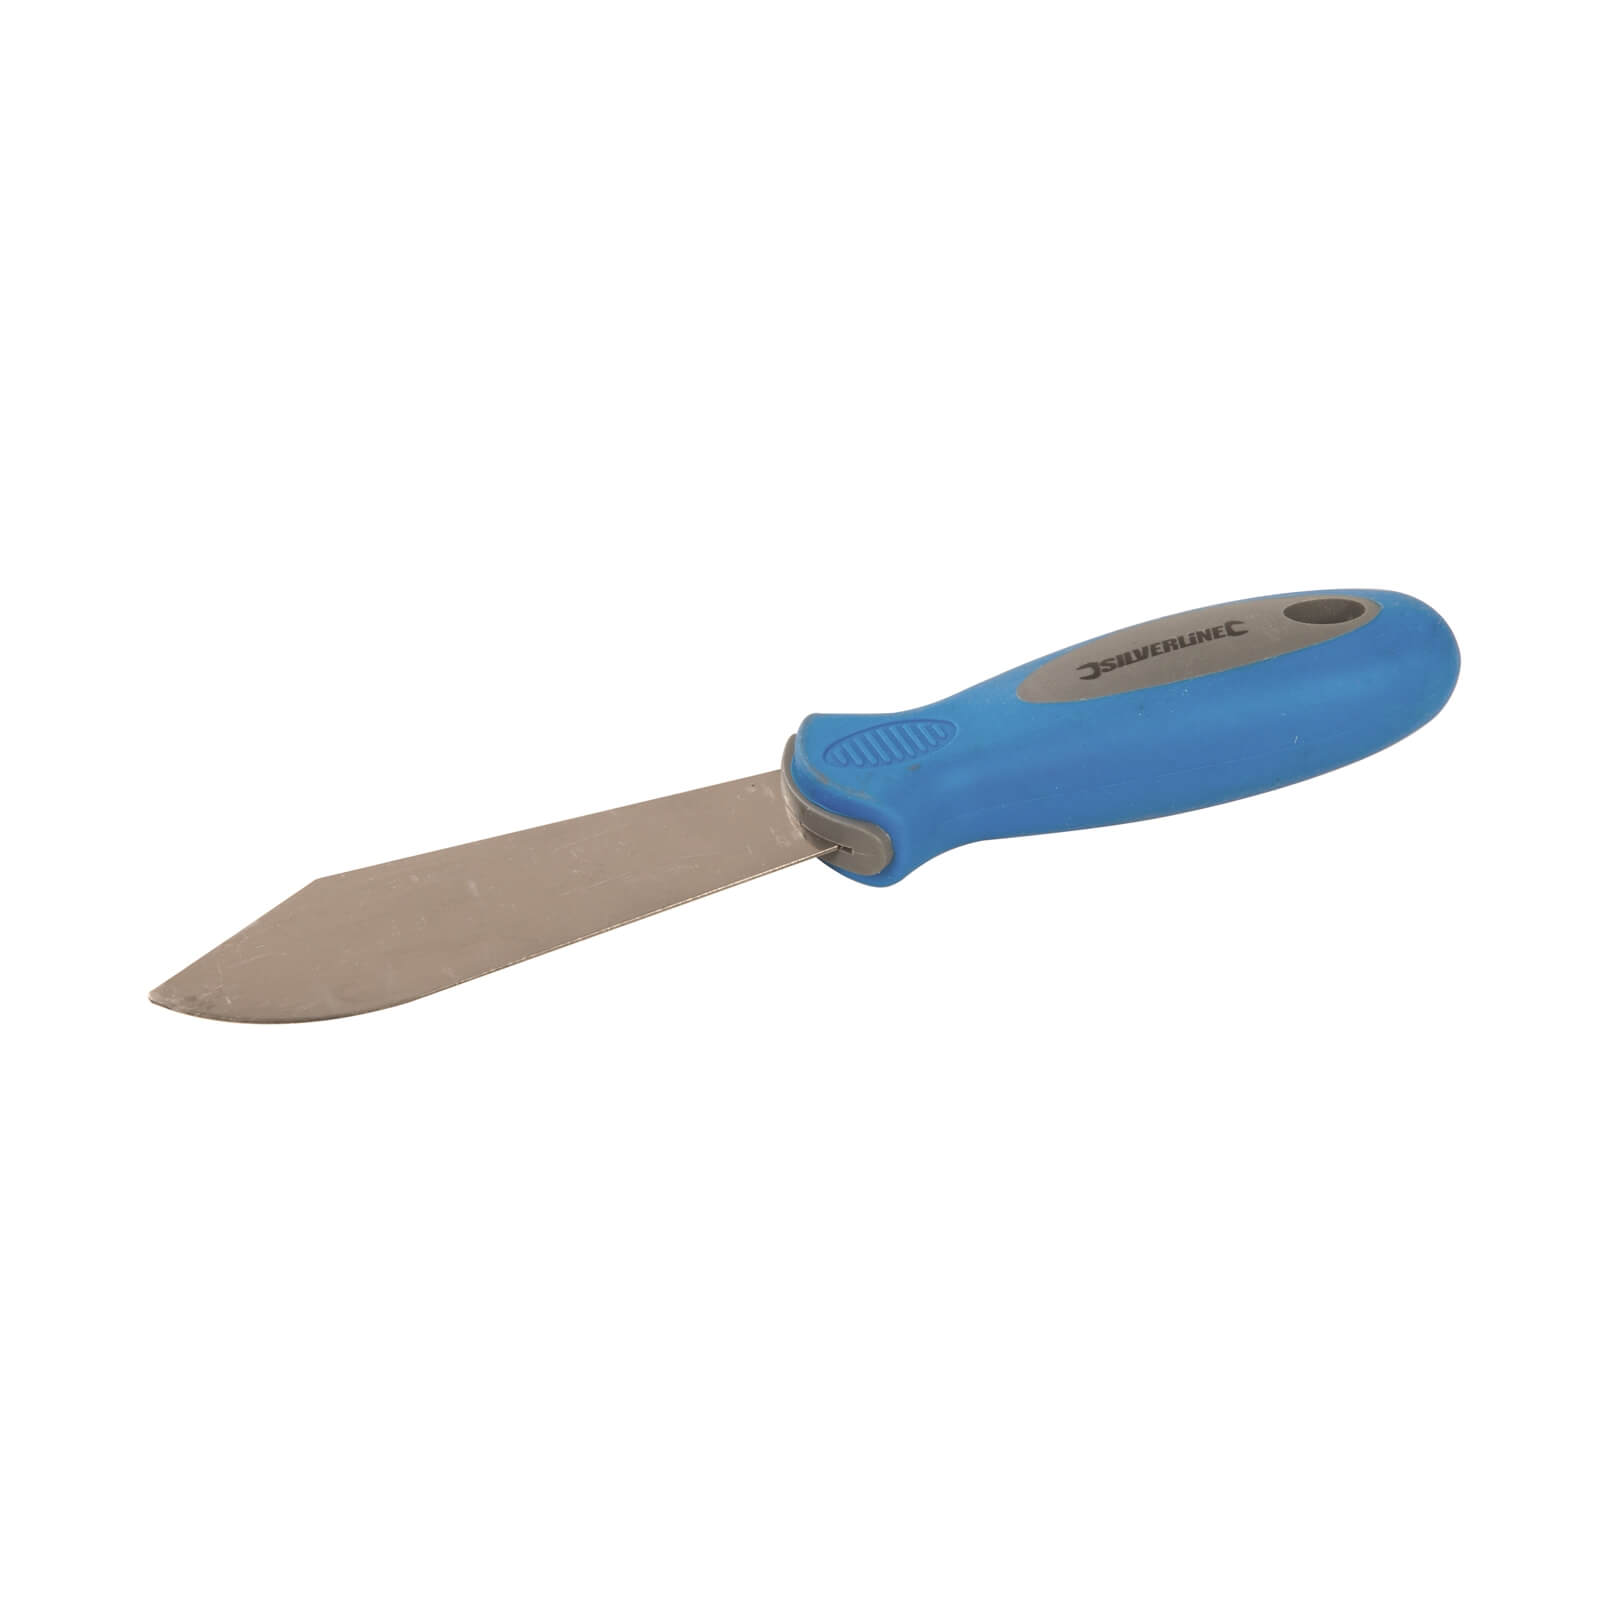 Silverline Expert Putty Knife - 40mm